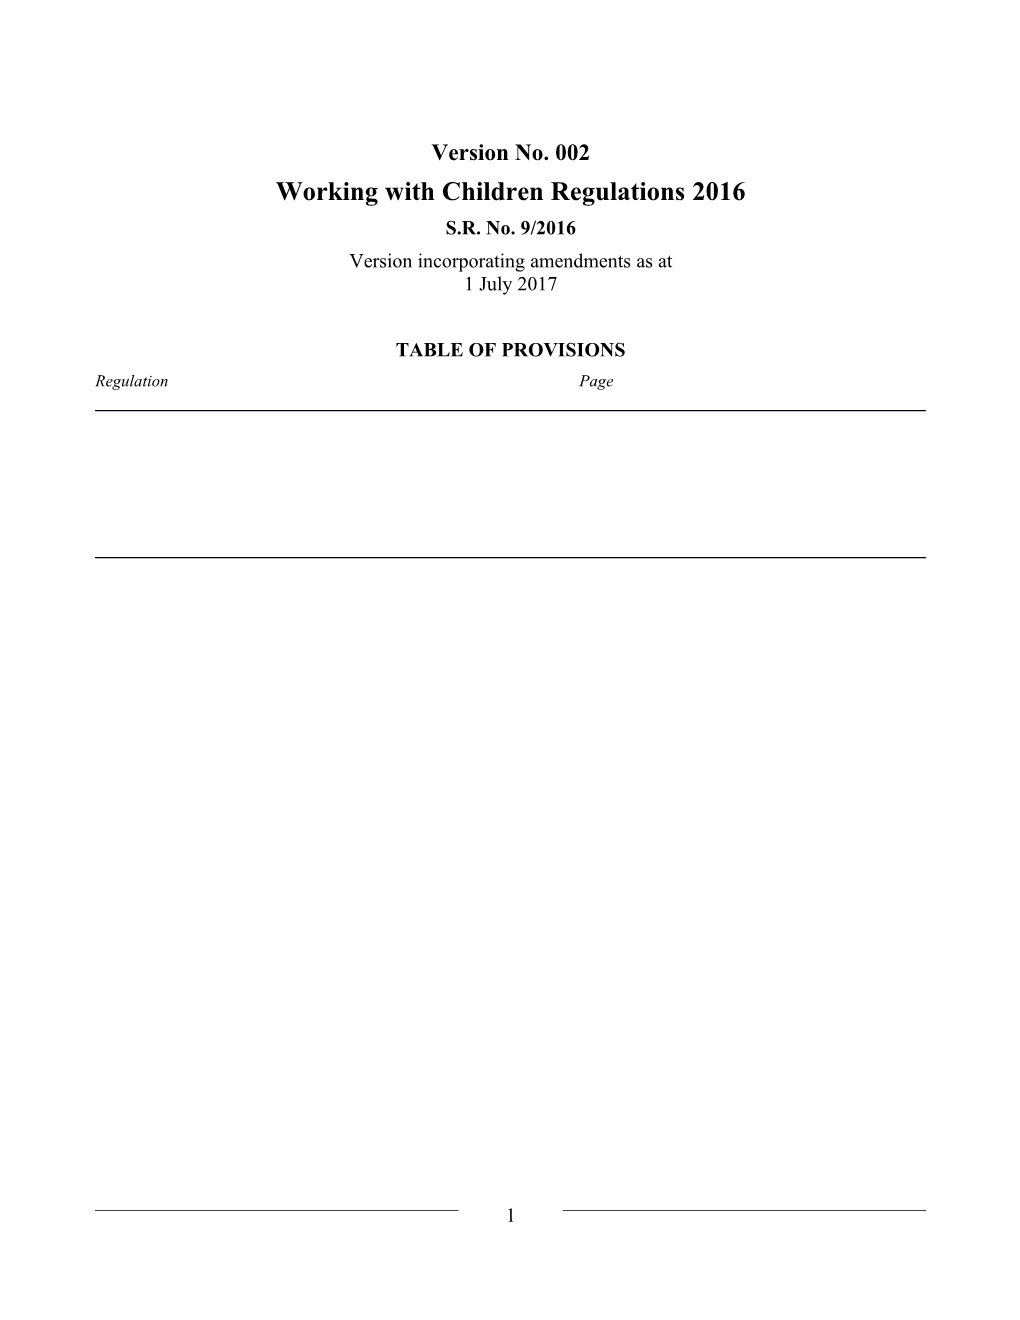 Working with Children Regulations 2016